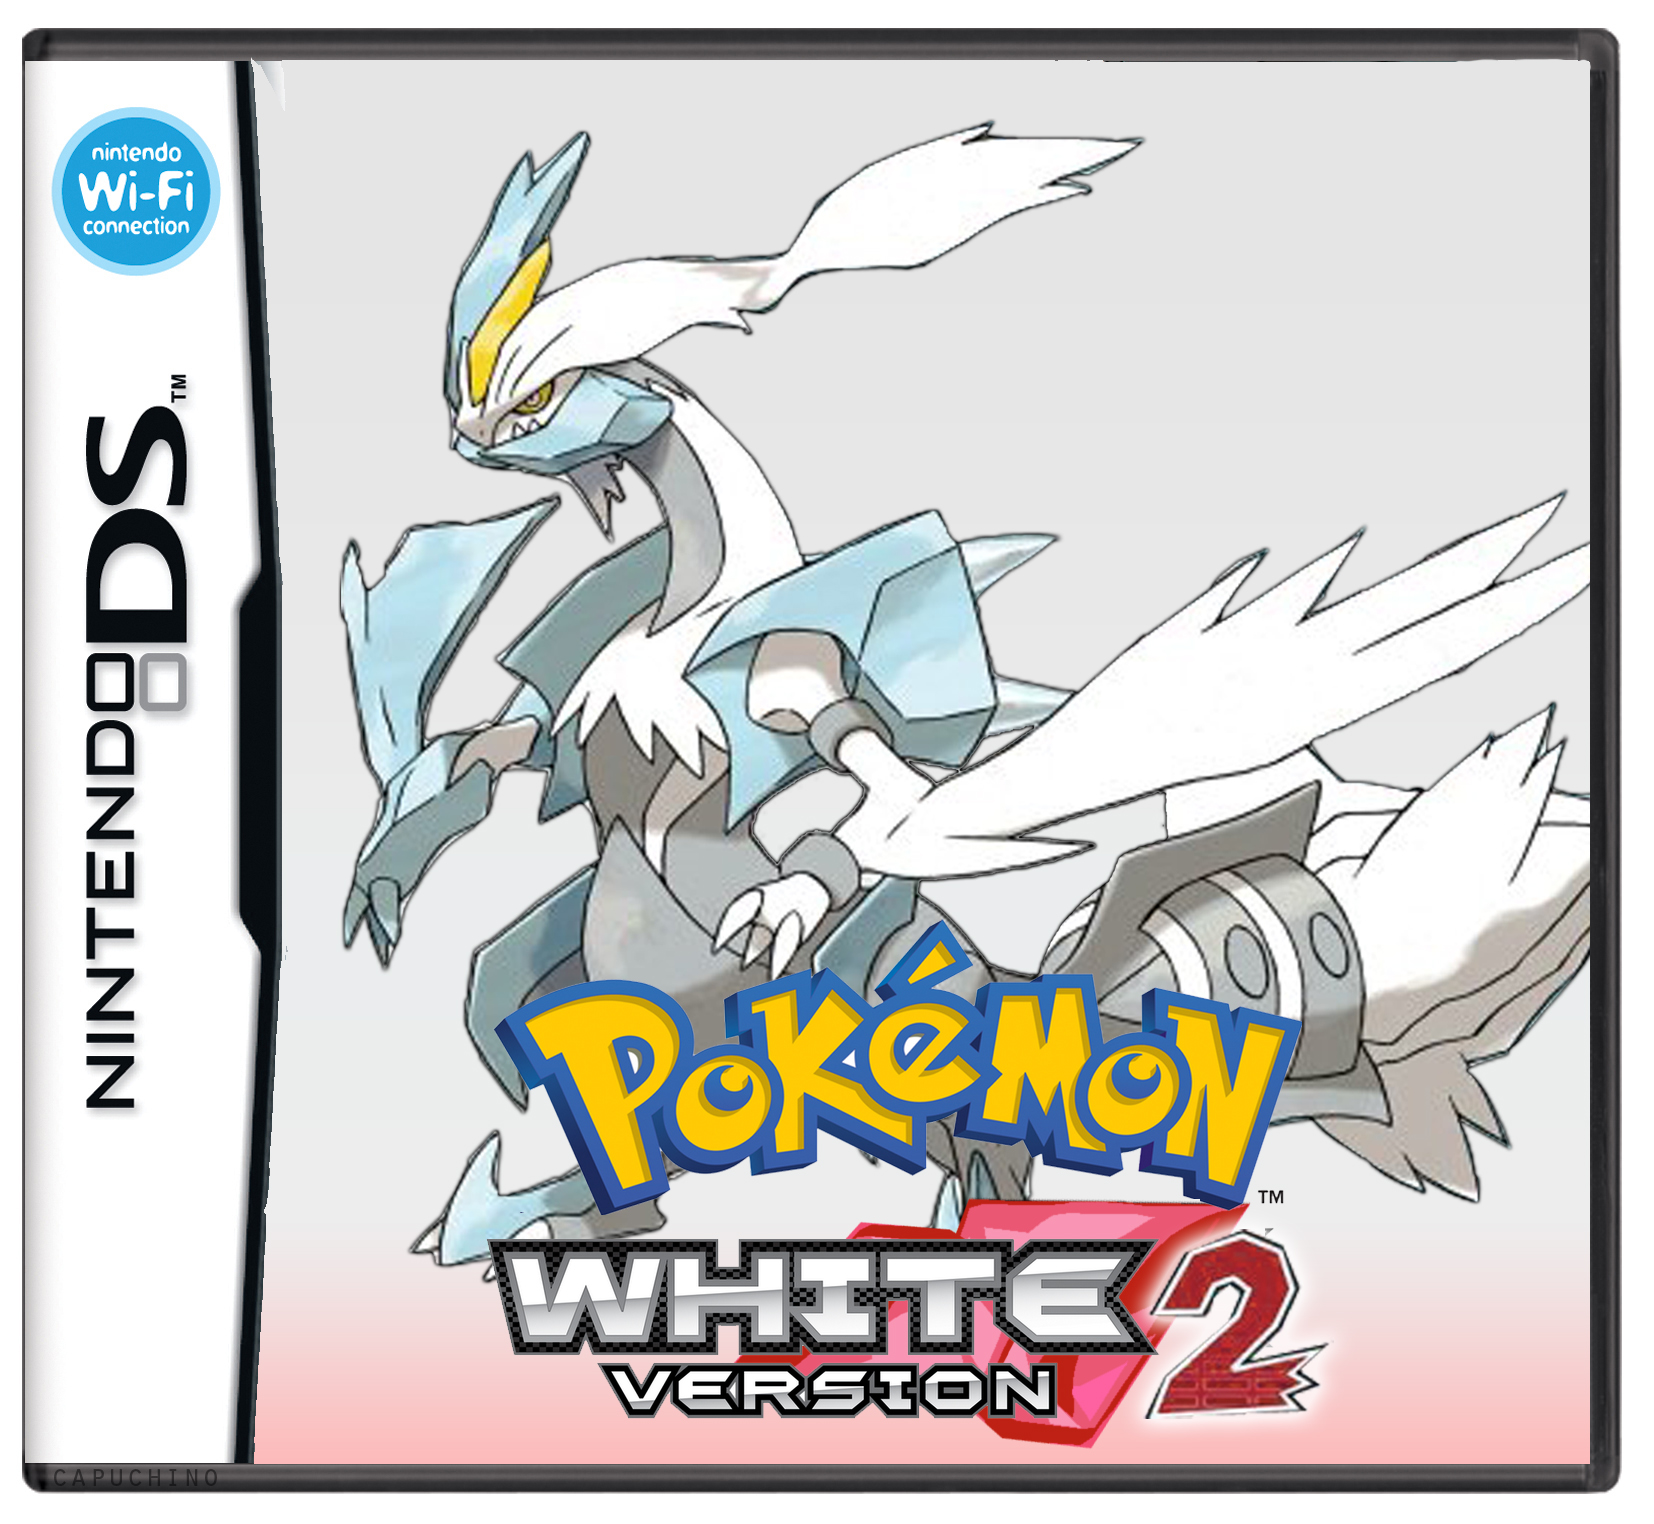  Pokemon White Version 2 - Nintendo DS : Video Games